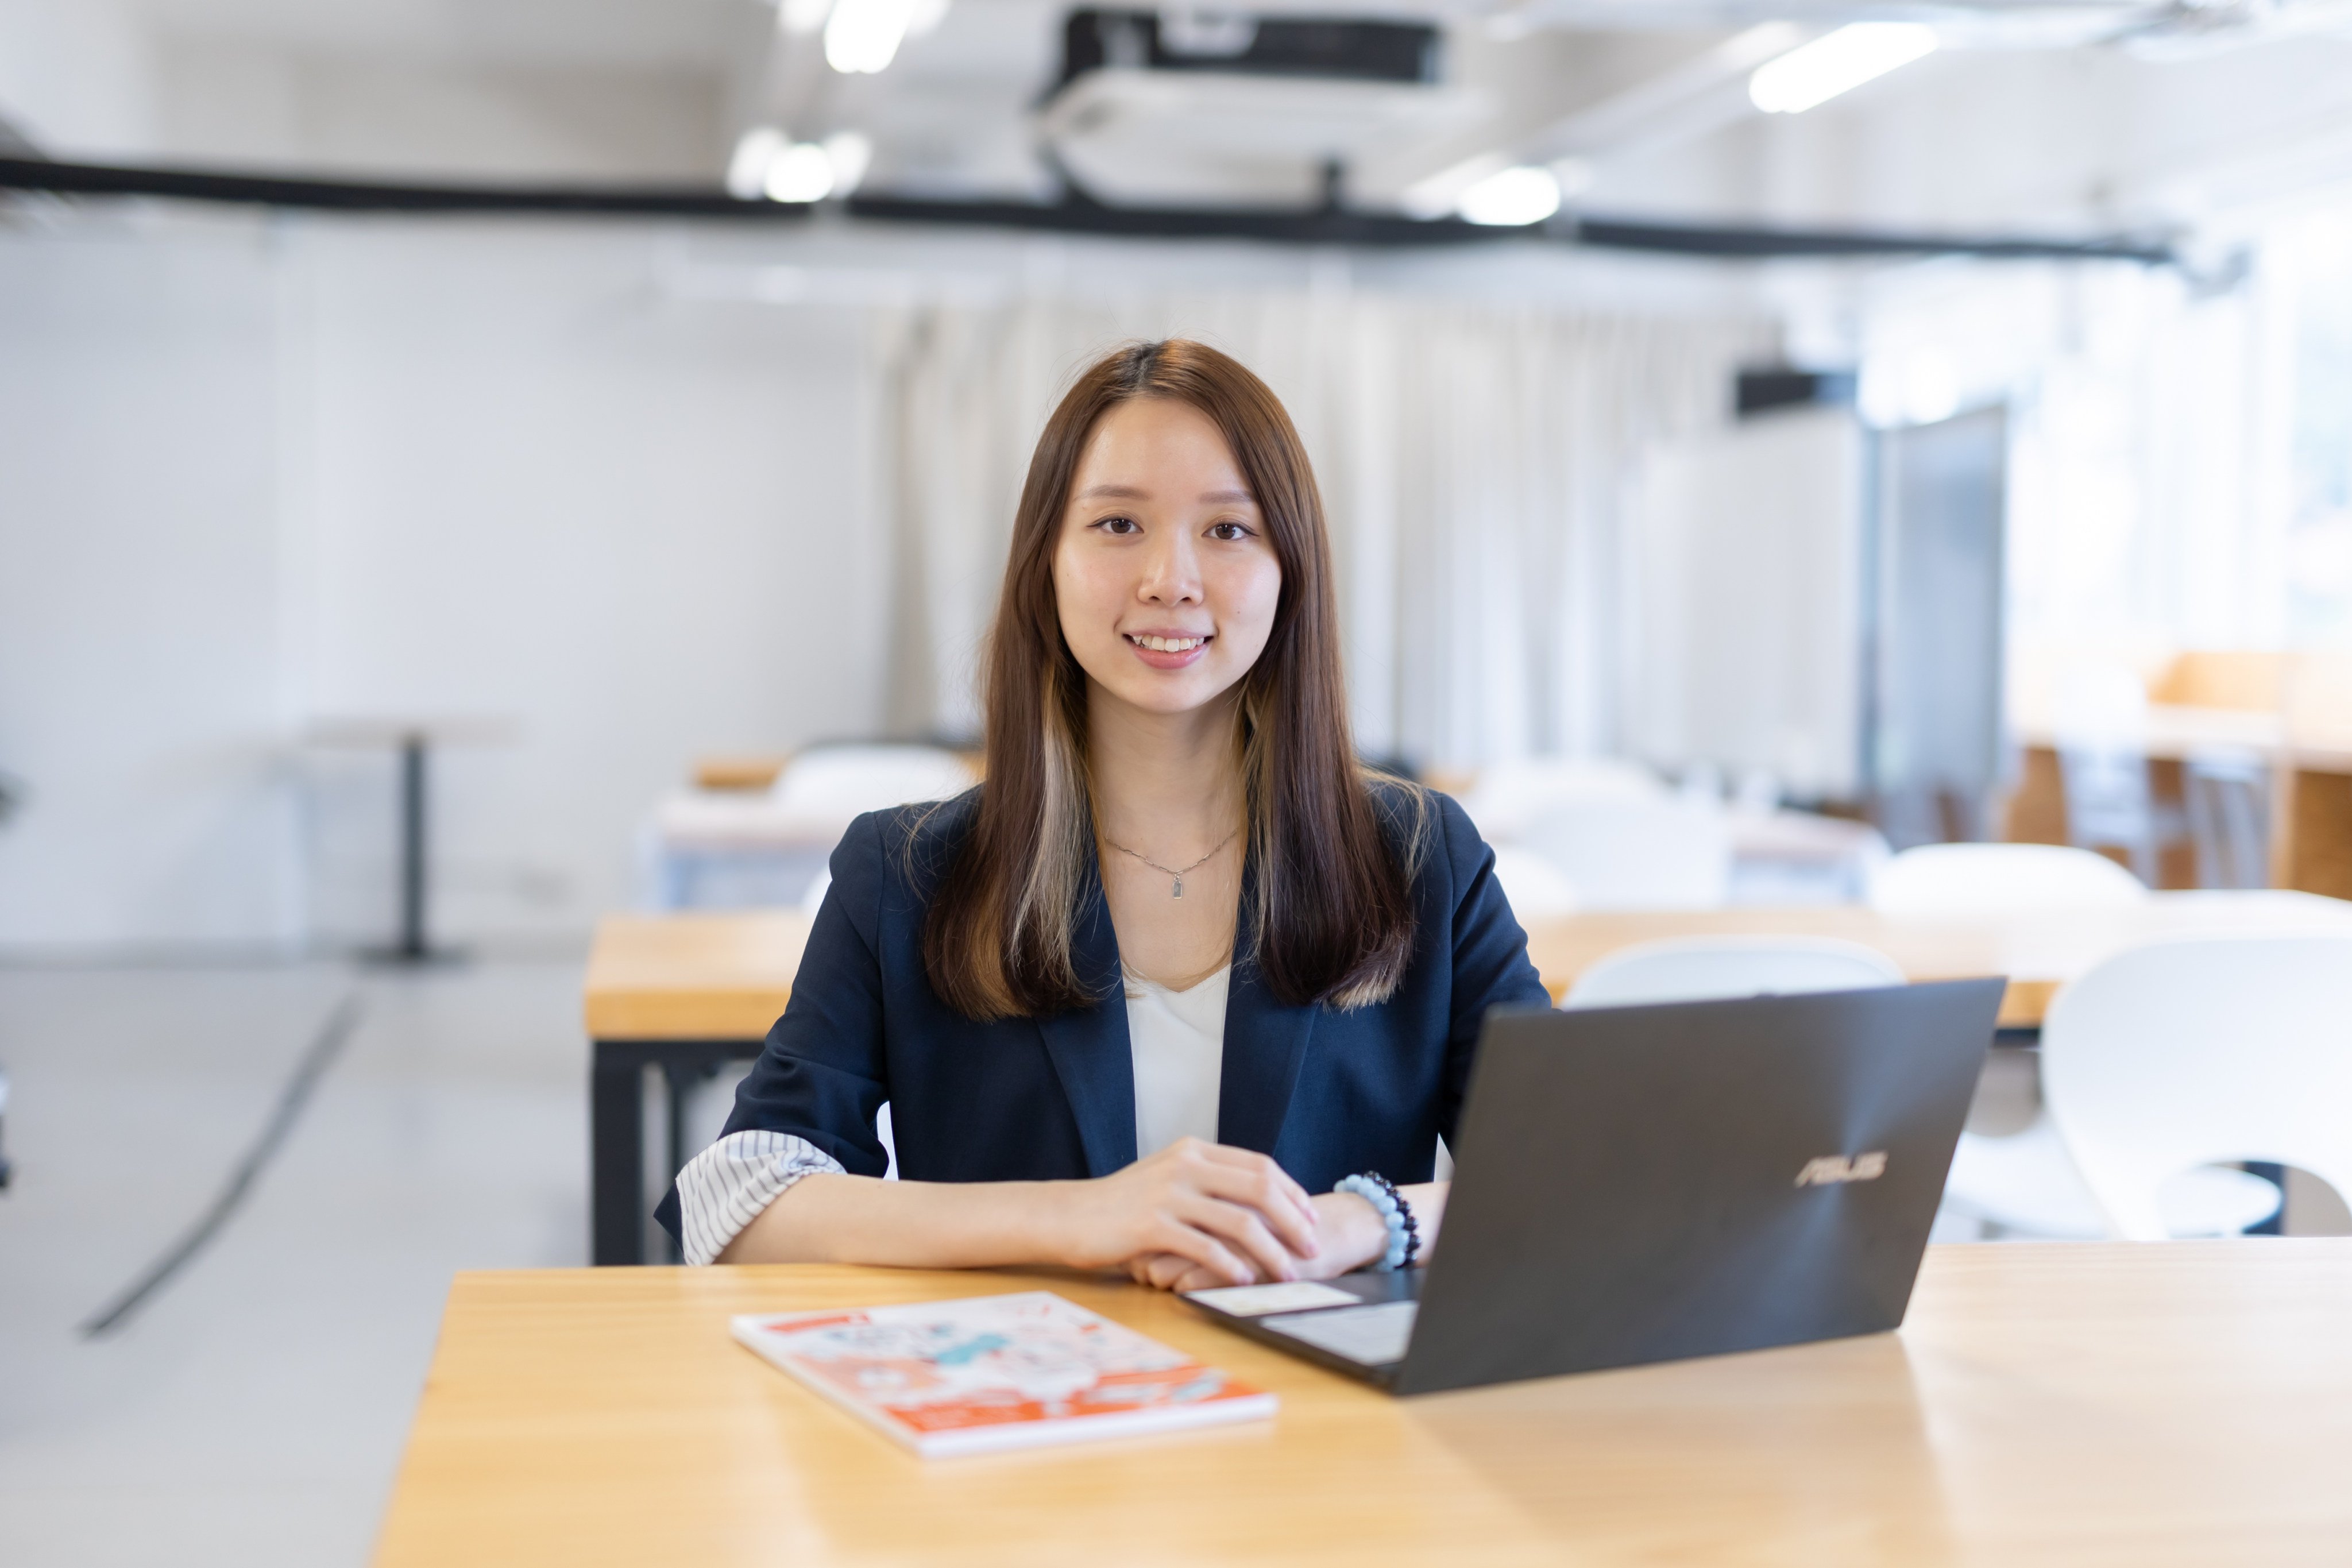 At only 22 years old, Evony Tsang has already emerged as a driving force in promoting social entrepreneurship in Hong Kong. Photo: Kong Yat-pang